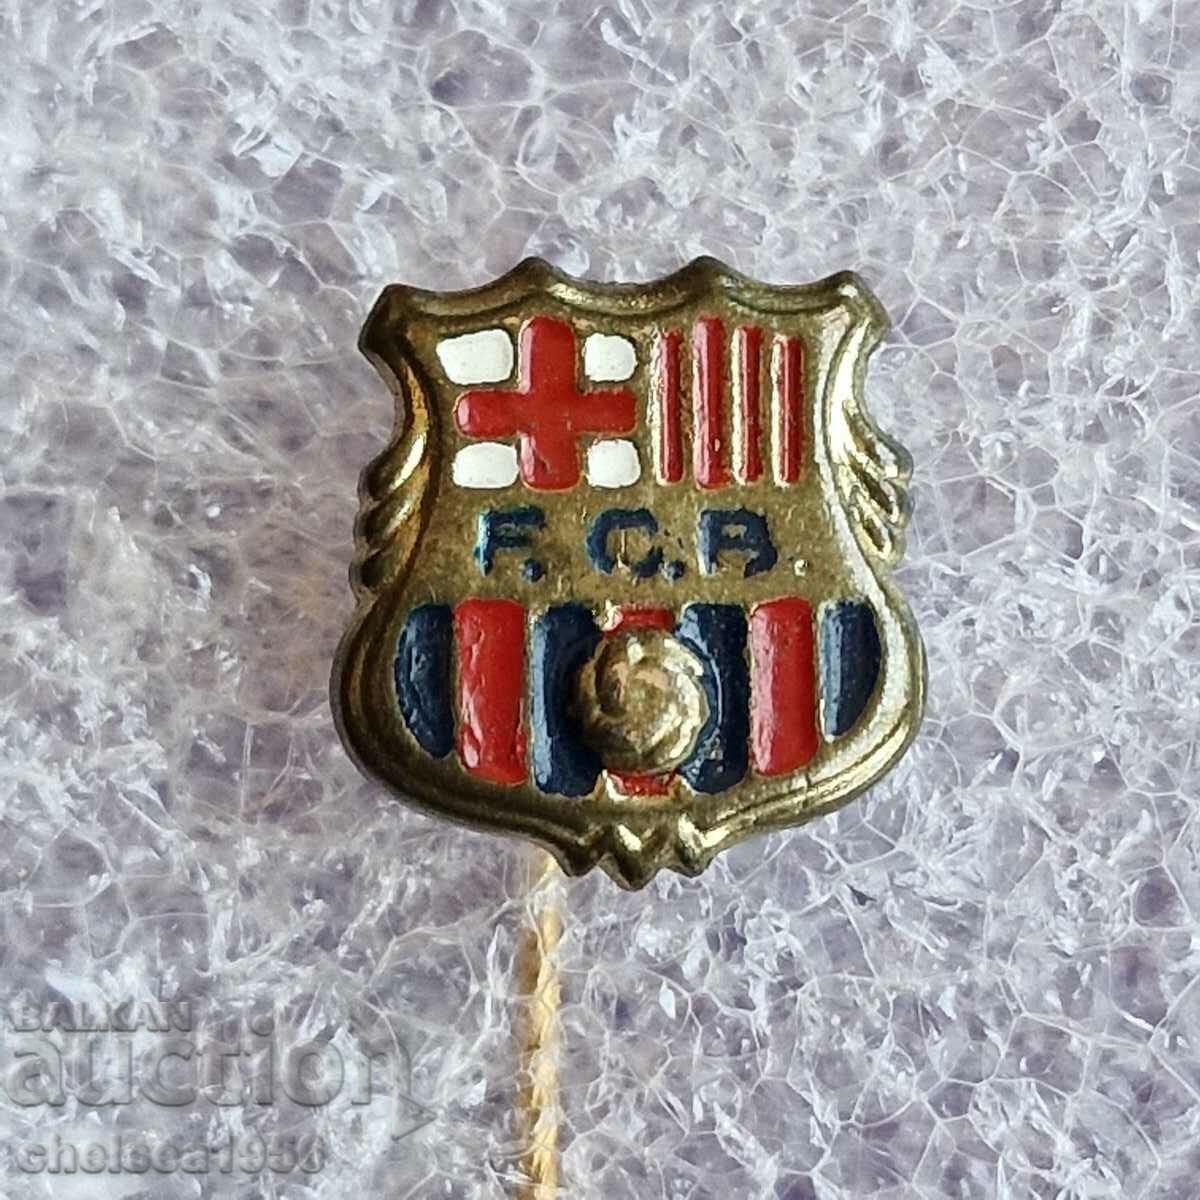 Barcelona badge